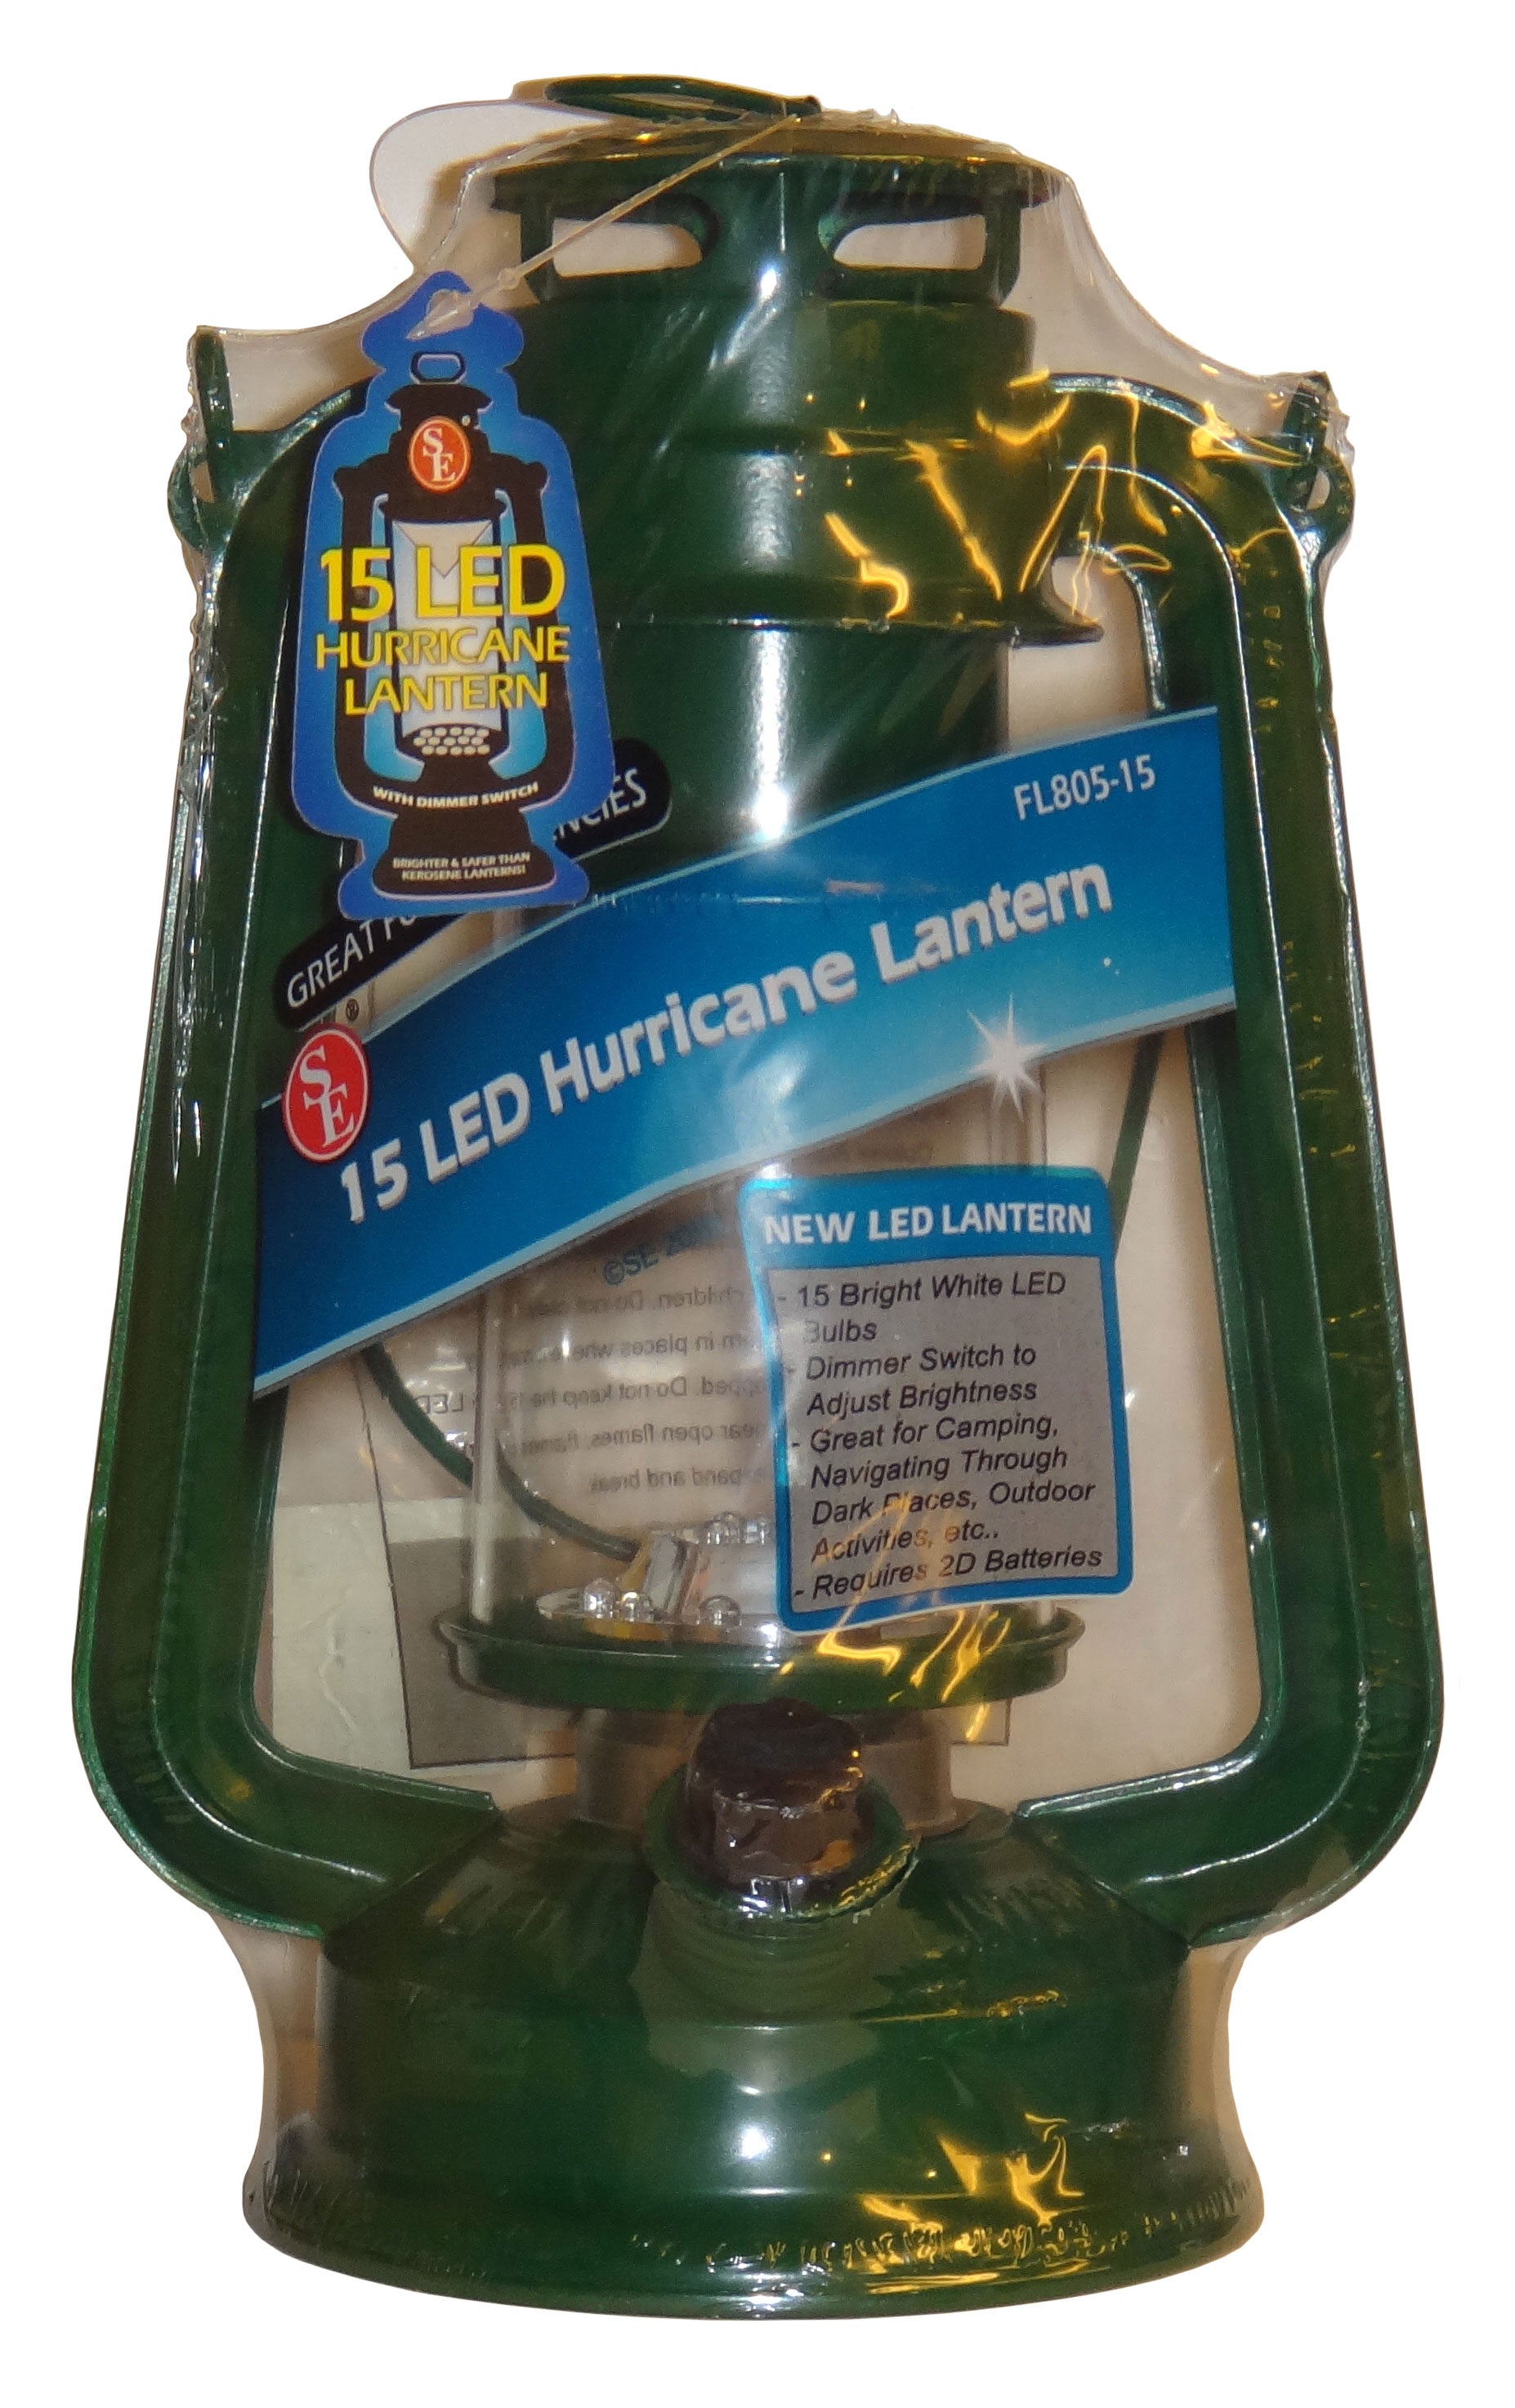 15-LED Hurricane Lantern